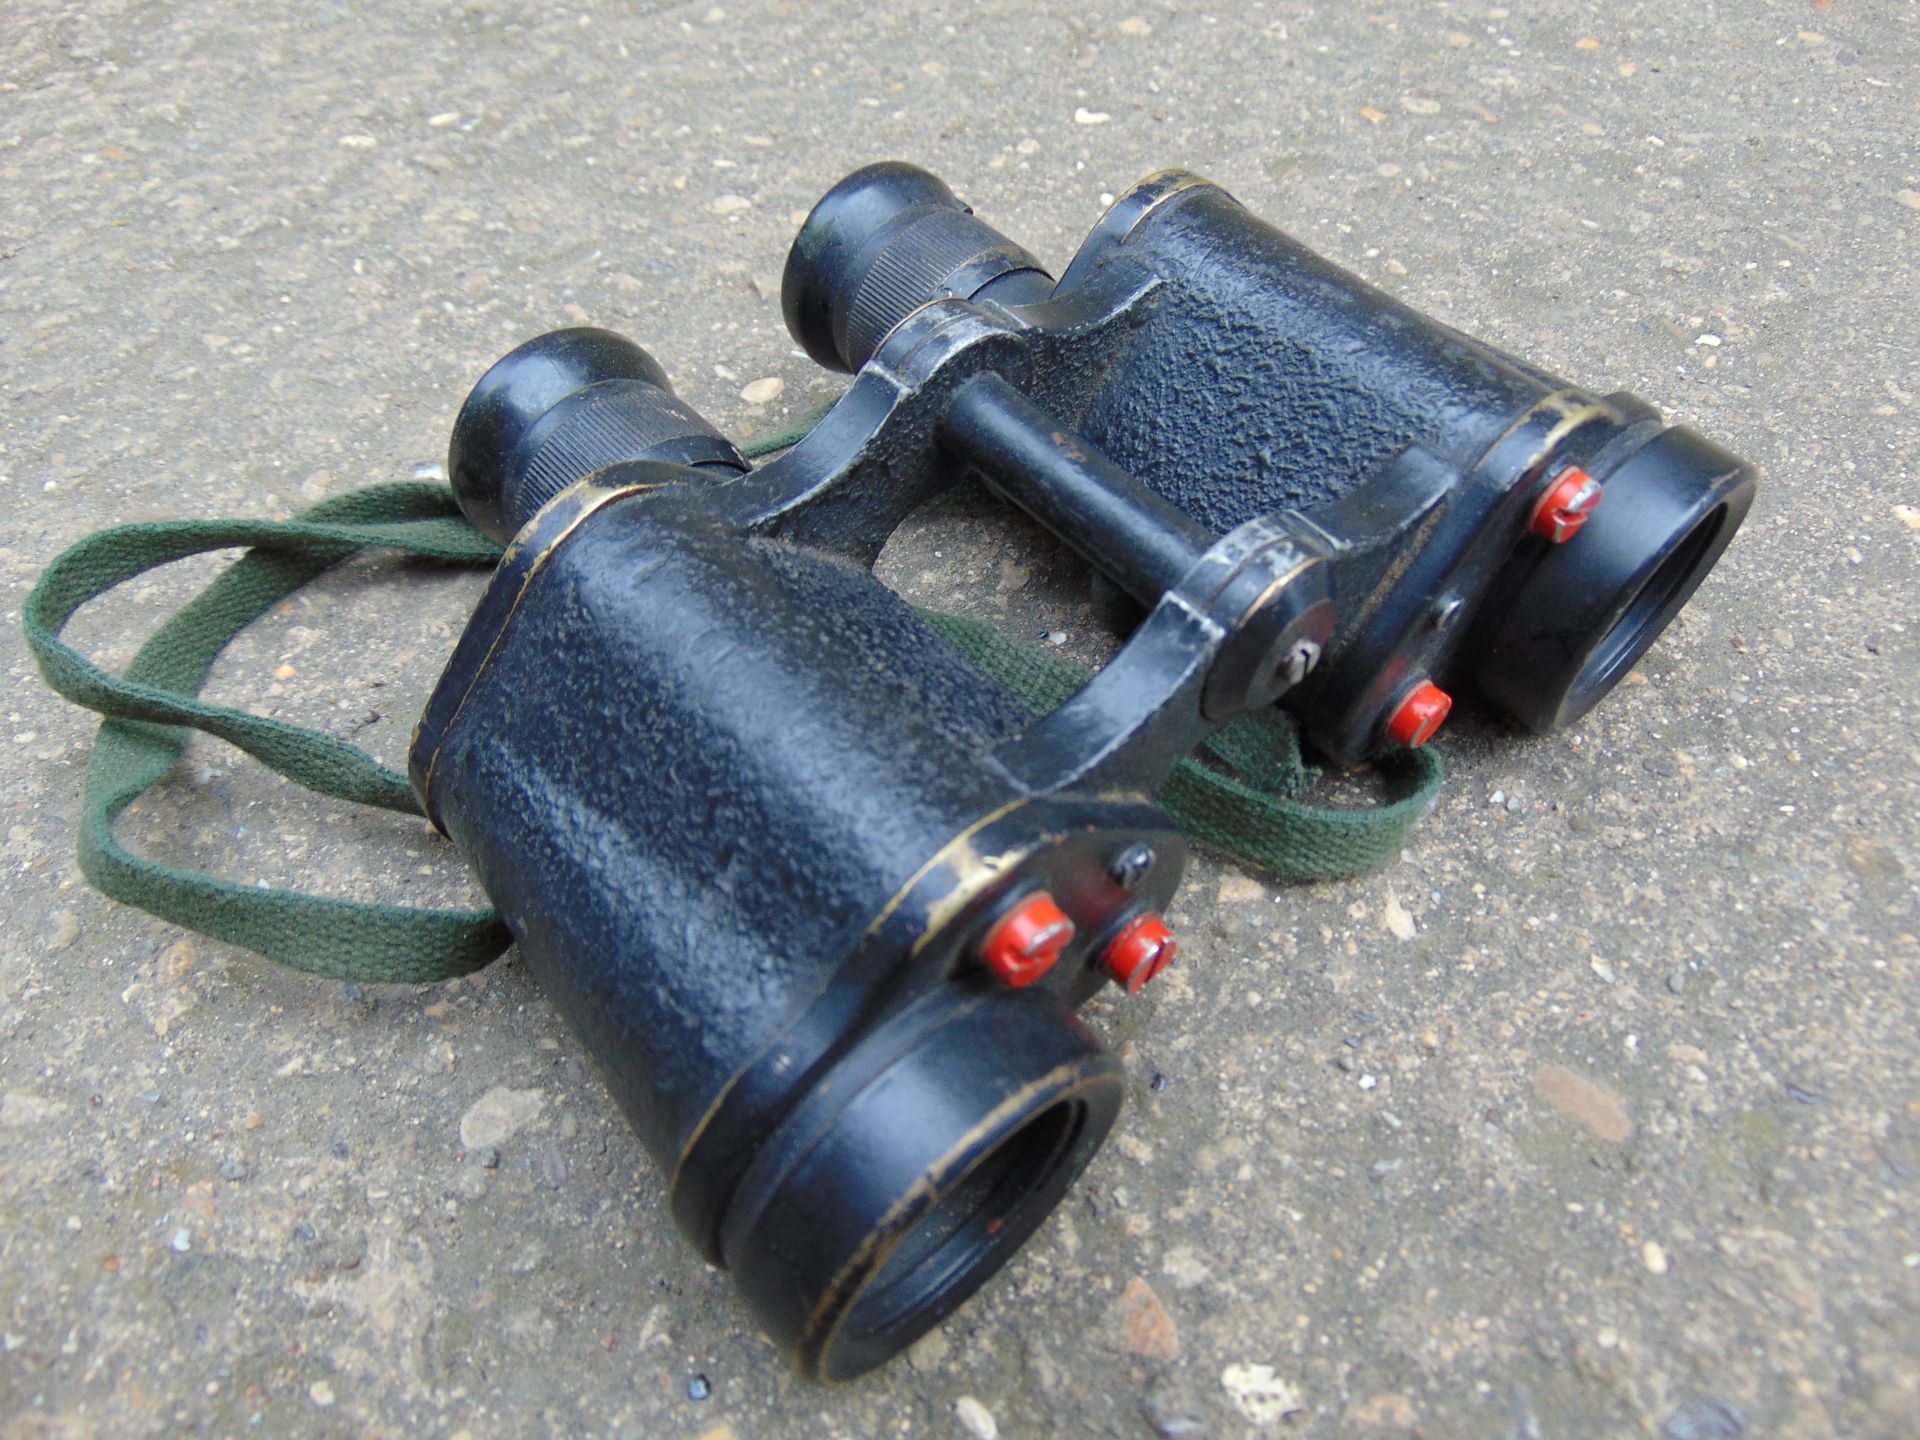 BINO PRISM No2 MK3 Binoculars intended for field use during World War 2